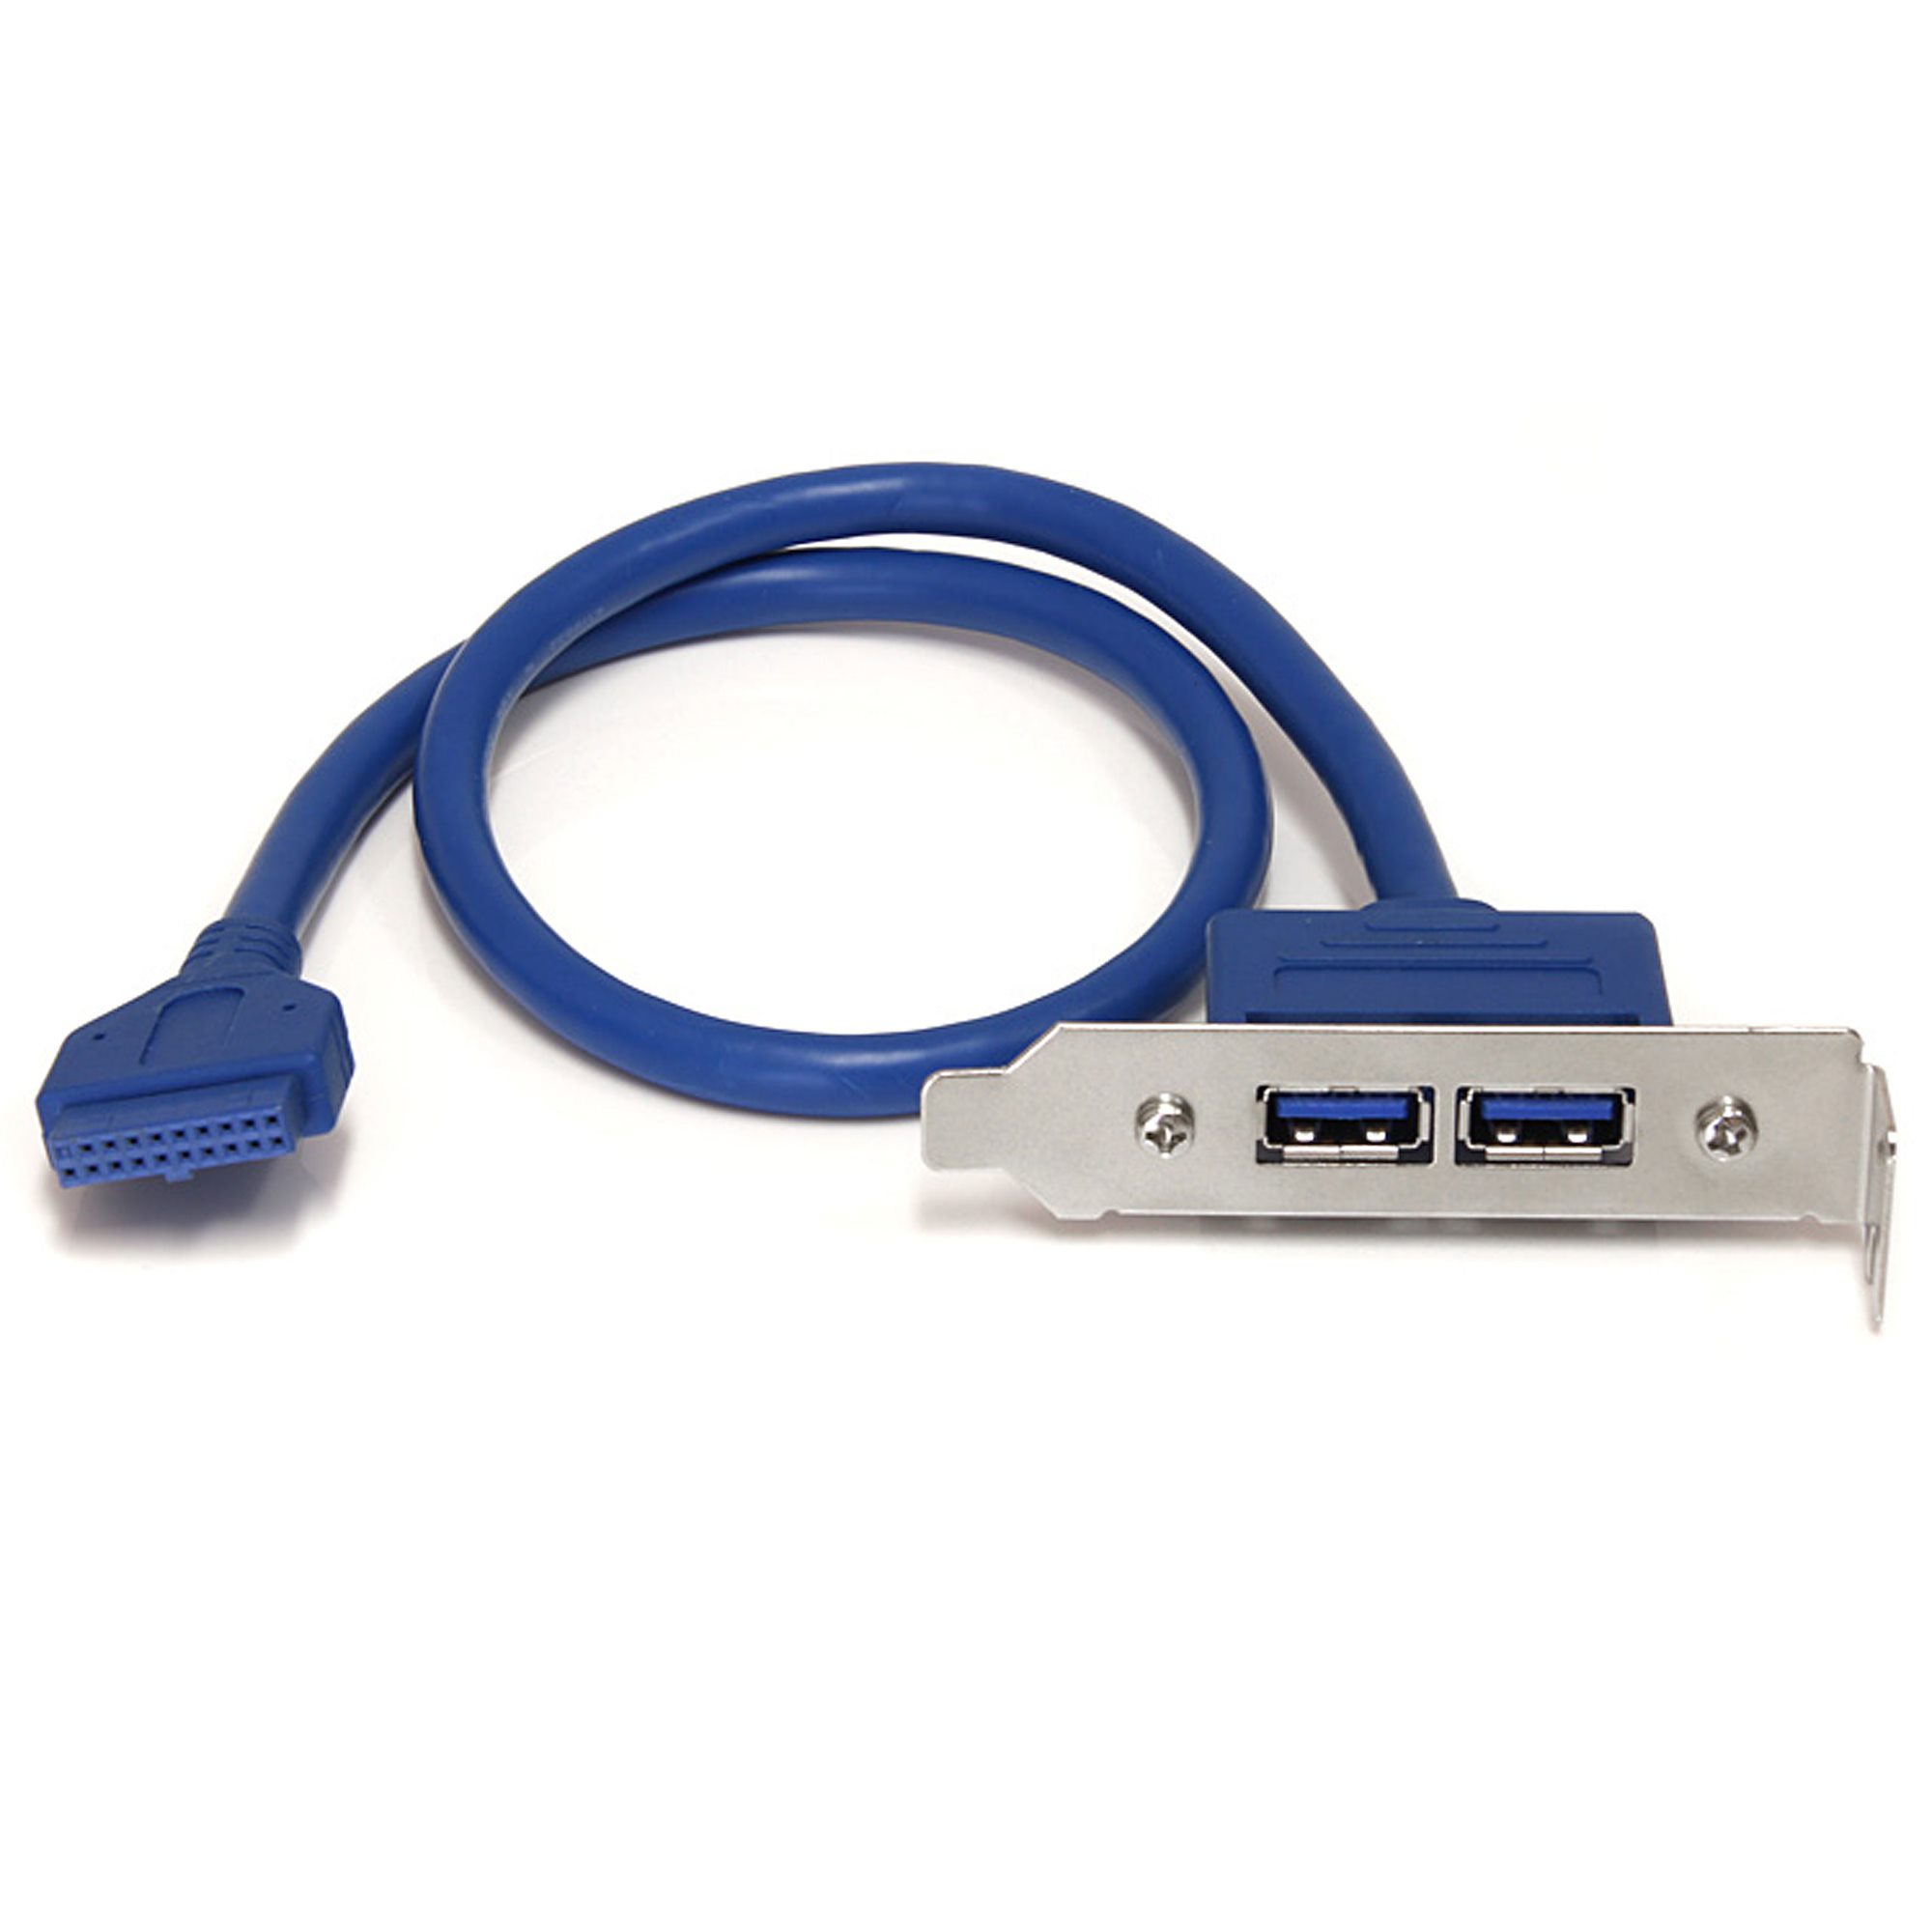 Usb порт память. Слот USB 2.0. 2x USB 3.0 Dual Ports a female Mount to motherboard 20pin header Cable 0.5m USB. Передняя планка USB 3.0. Слот юсб 3.0.